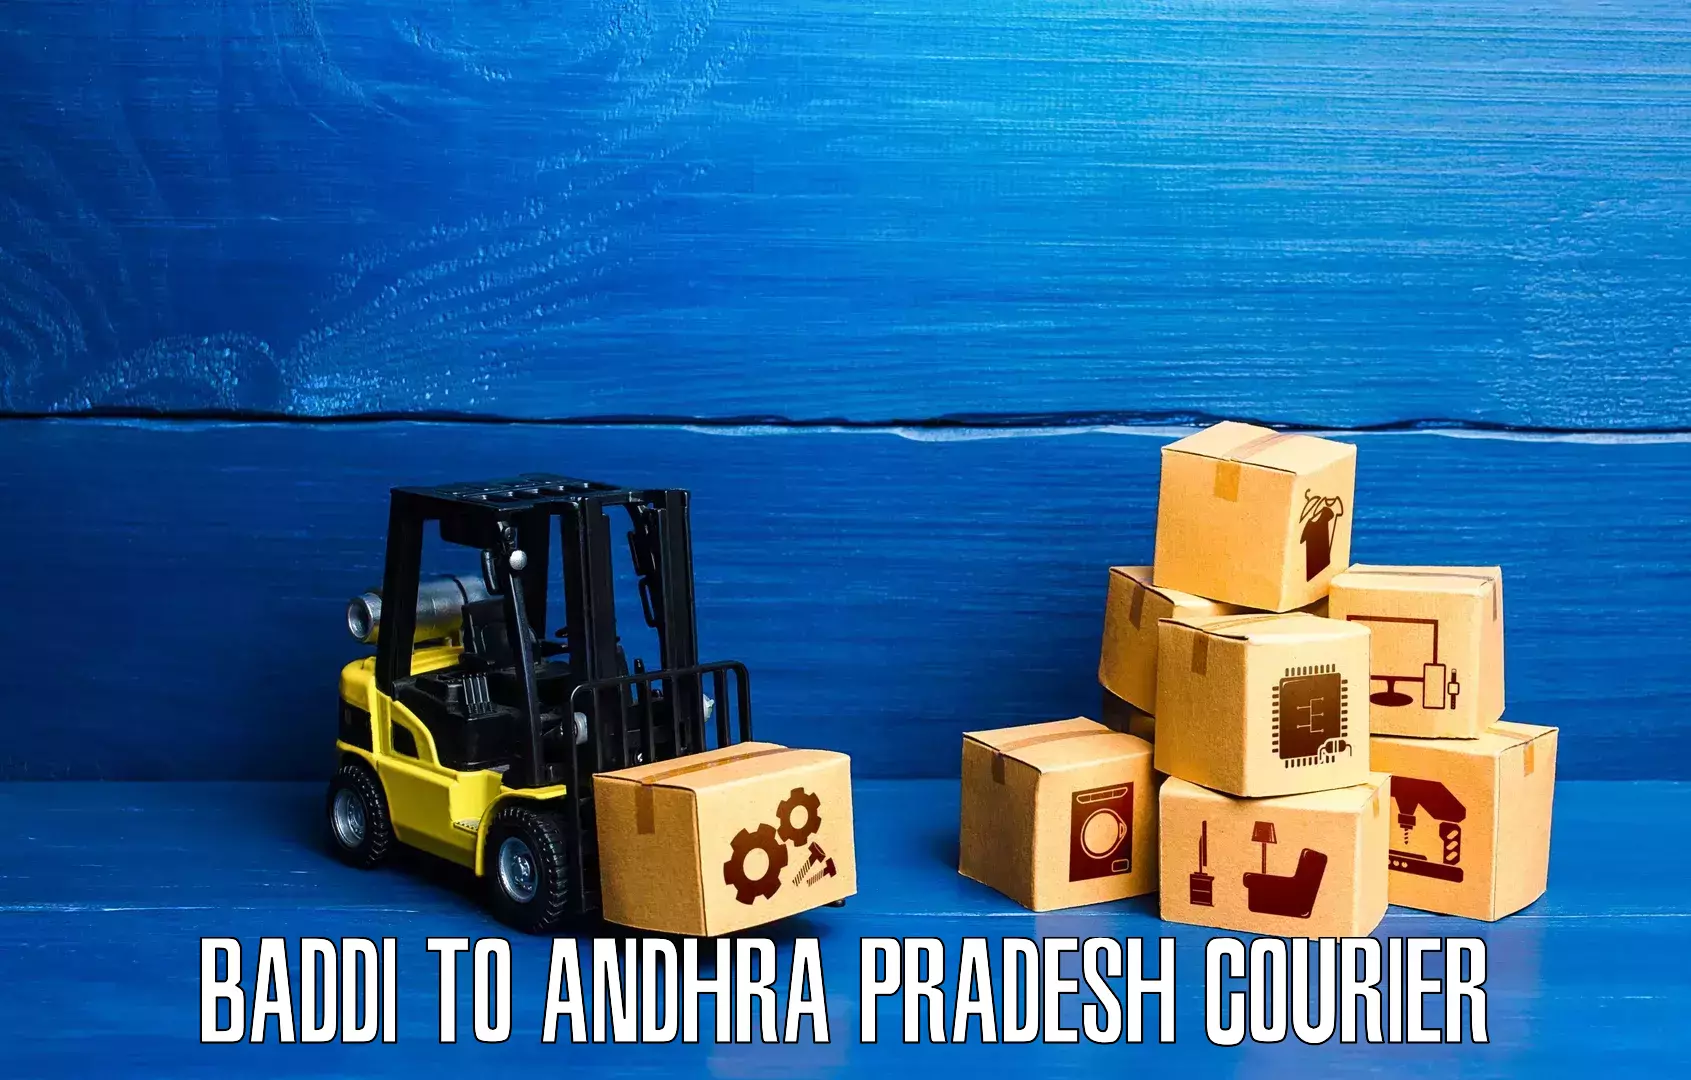 Courier service innovation Baddi to Devarapalli